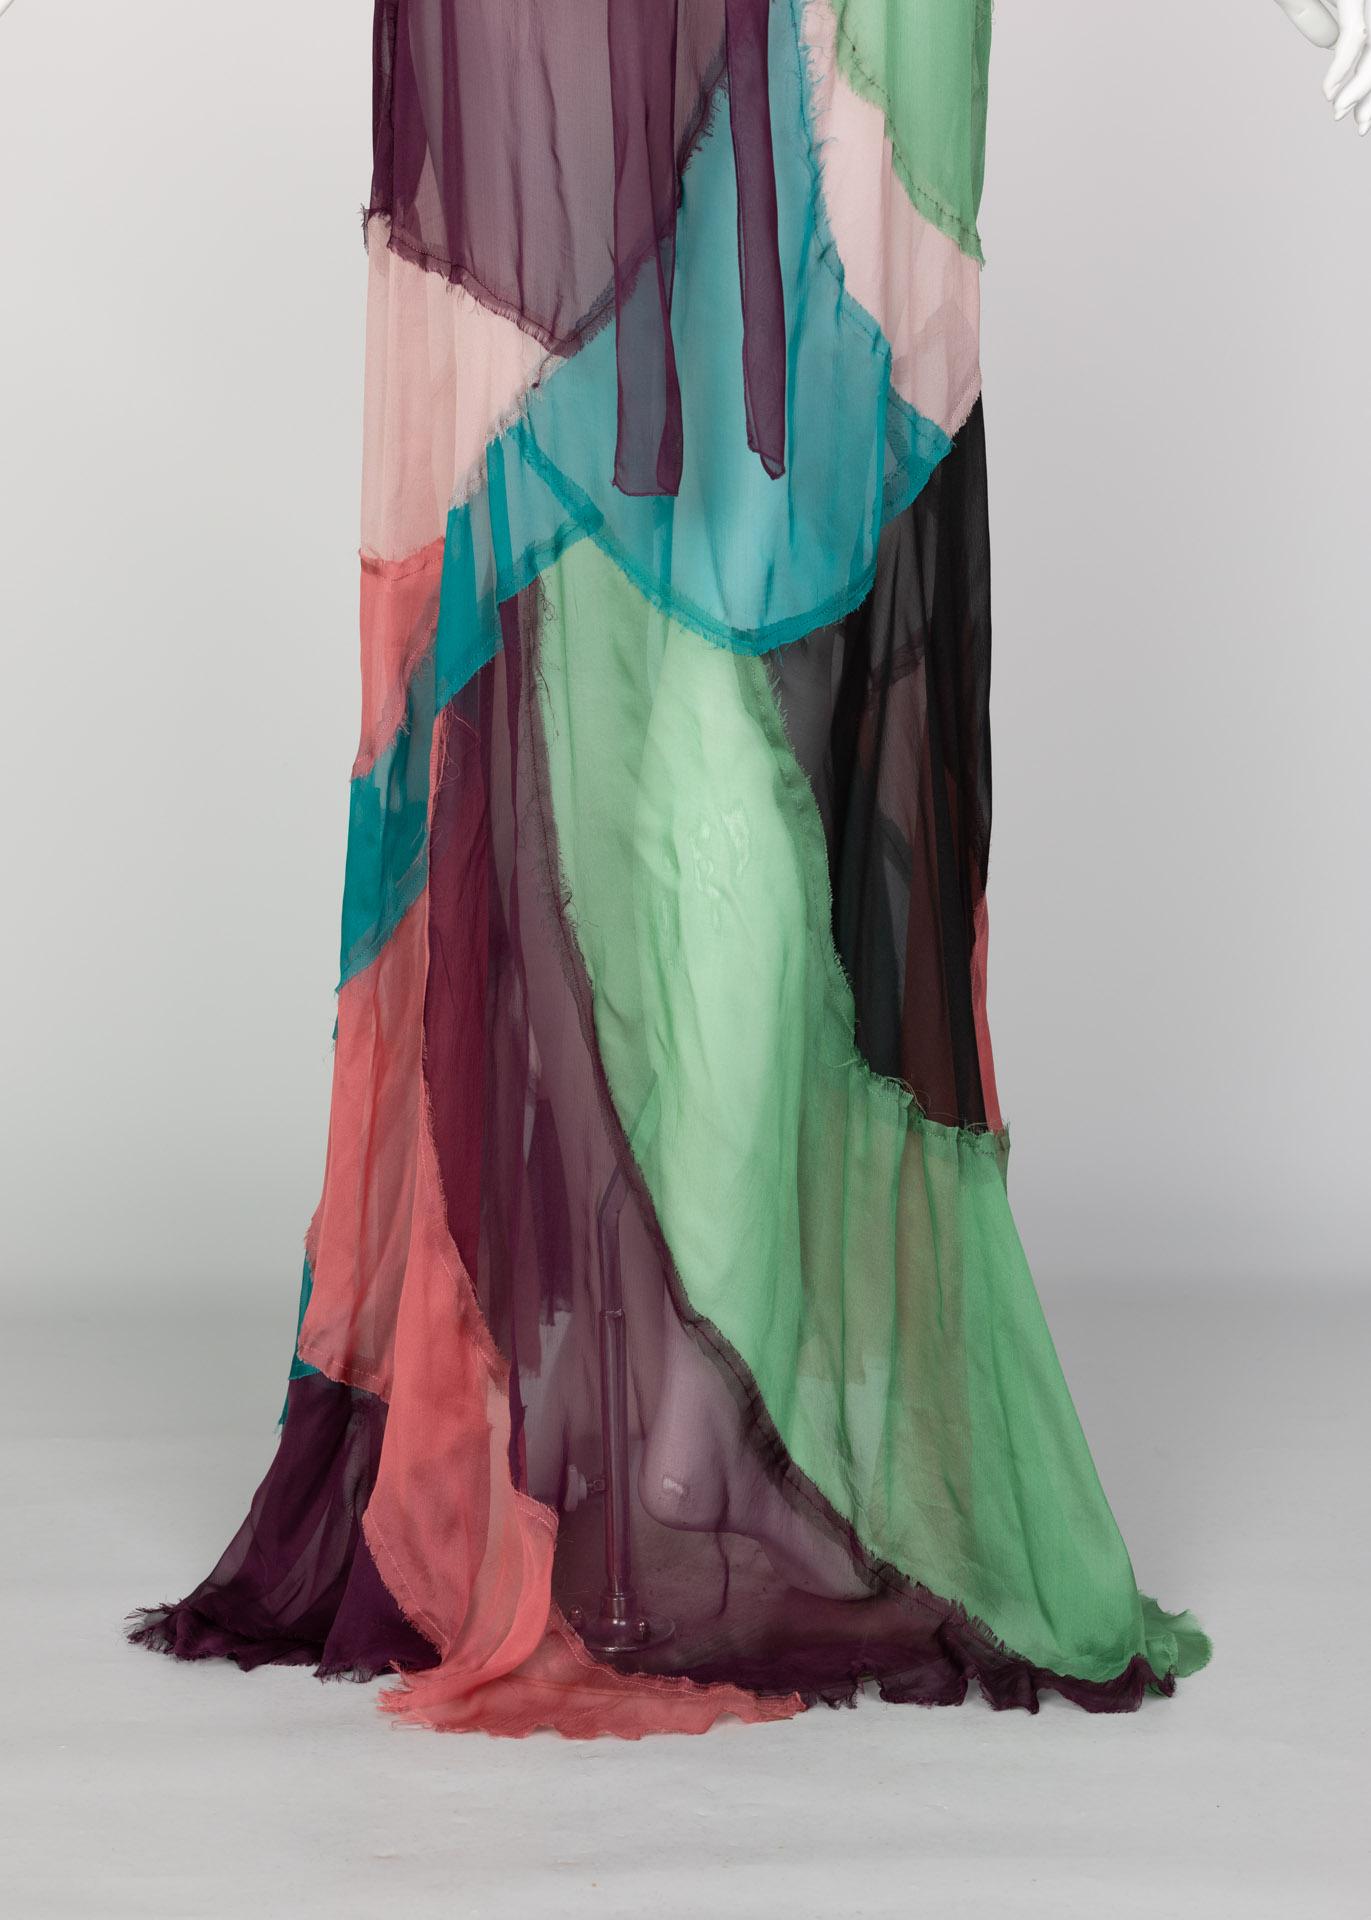 Alberta Ferretti Silk Chiffon Patchwork Open back Halter Gown, 2005 For Sale 8